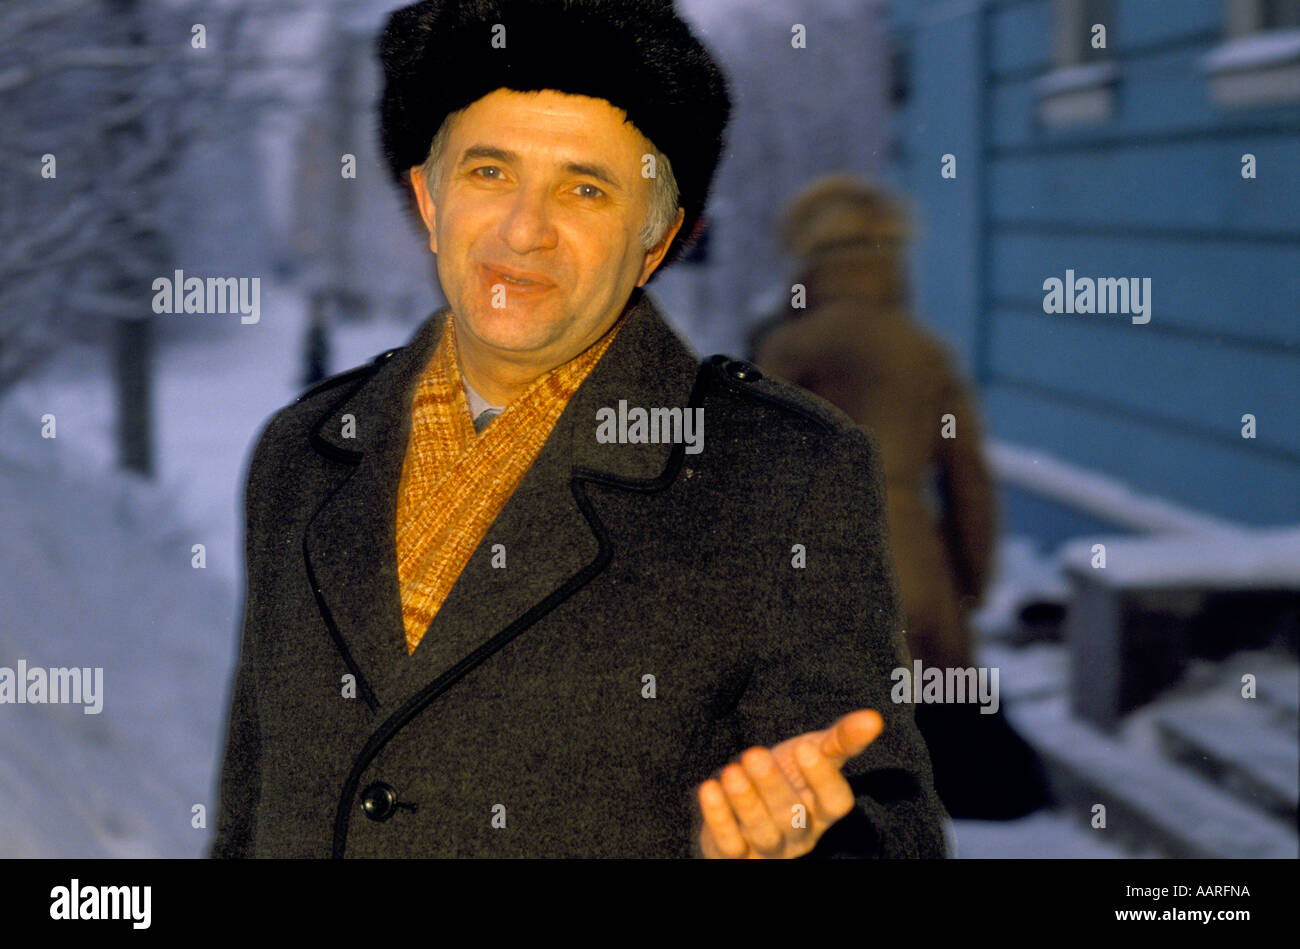 MURMANSK ALEXANDER OBOLENSKY MEMBER OF THE DUMA FOR MURMANSK RUSSIA 1990 1990 Stock Photo